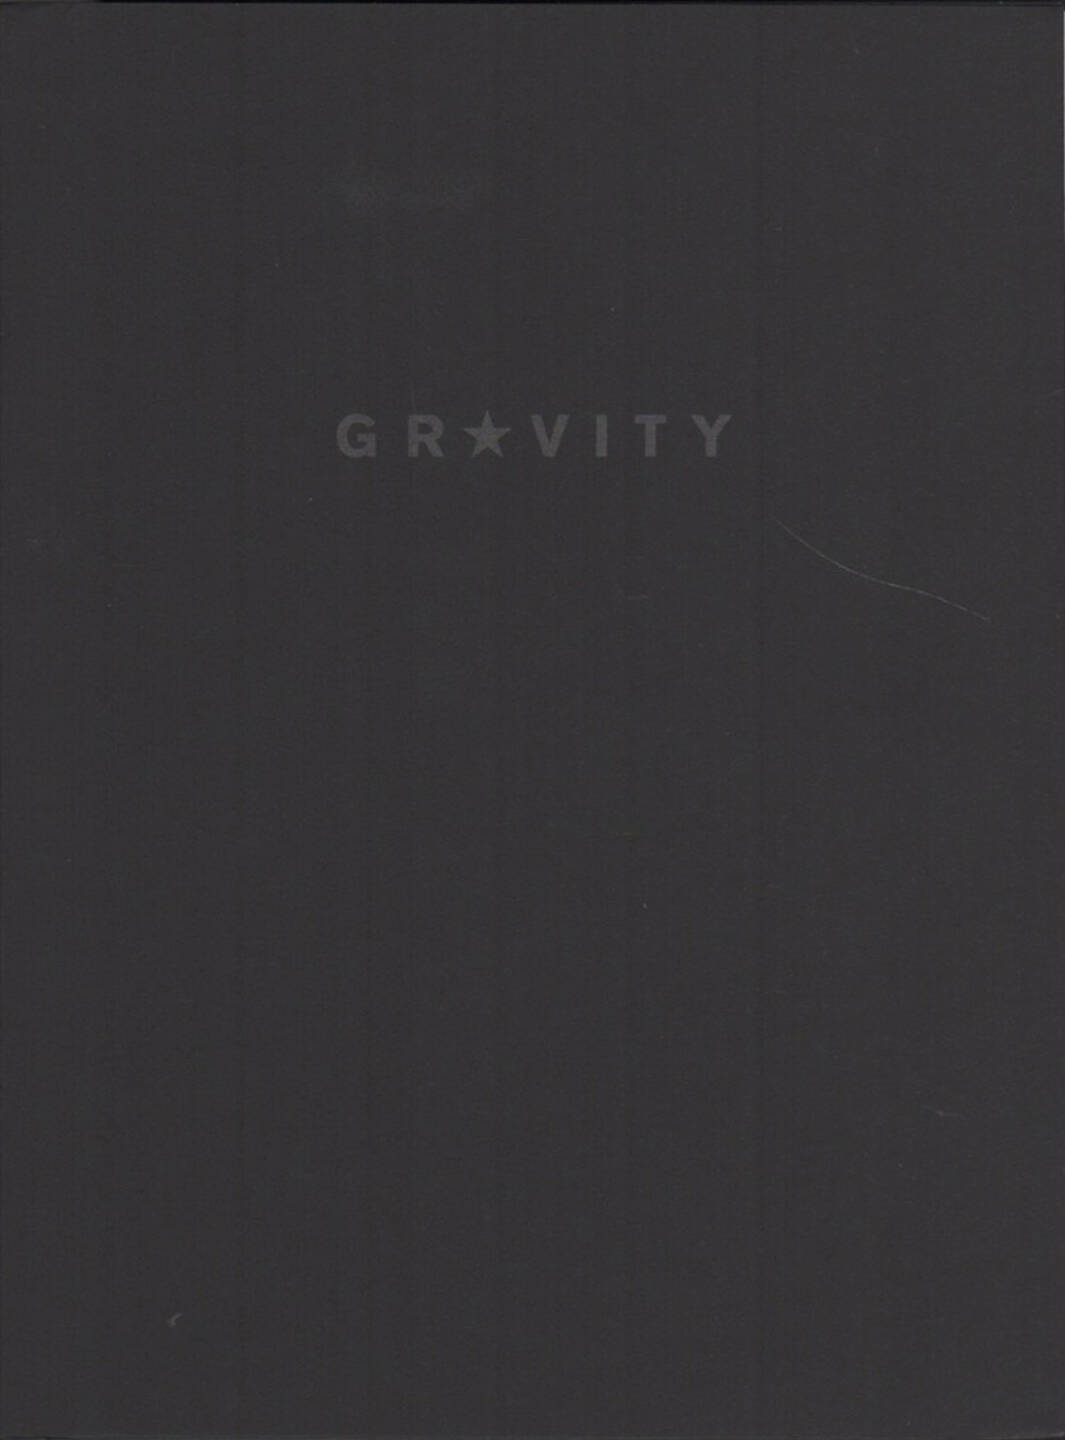 Michel Mazzoni - Gravity, Arp2 Publishing & Editions Enigmatiques 2015, Cover - http://josefchladek.com/book/michel_mazzoni_-_gravity